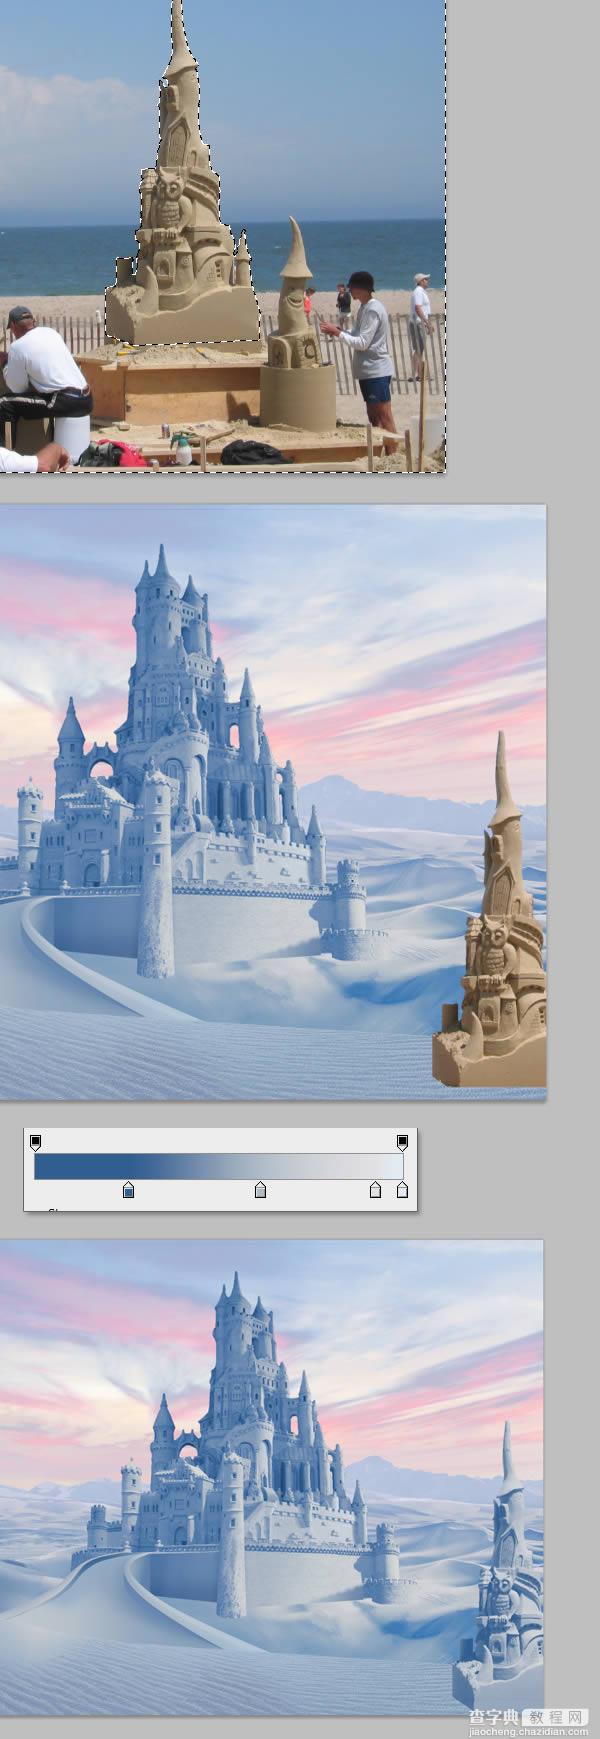 photoshop将荒漠场景打造出迪士尼风格的雪景图57